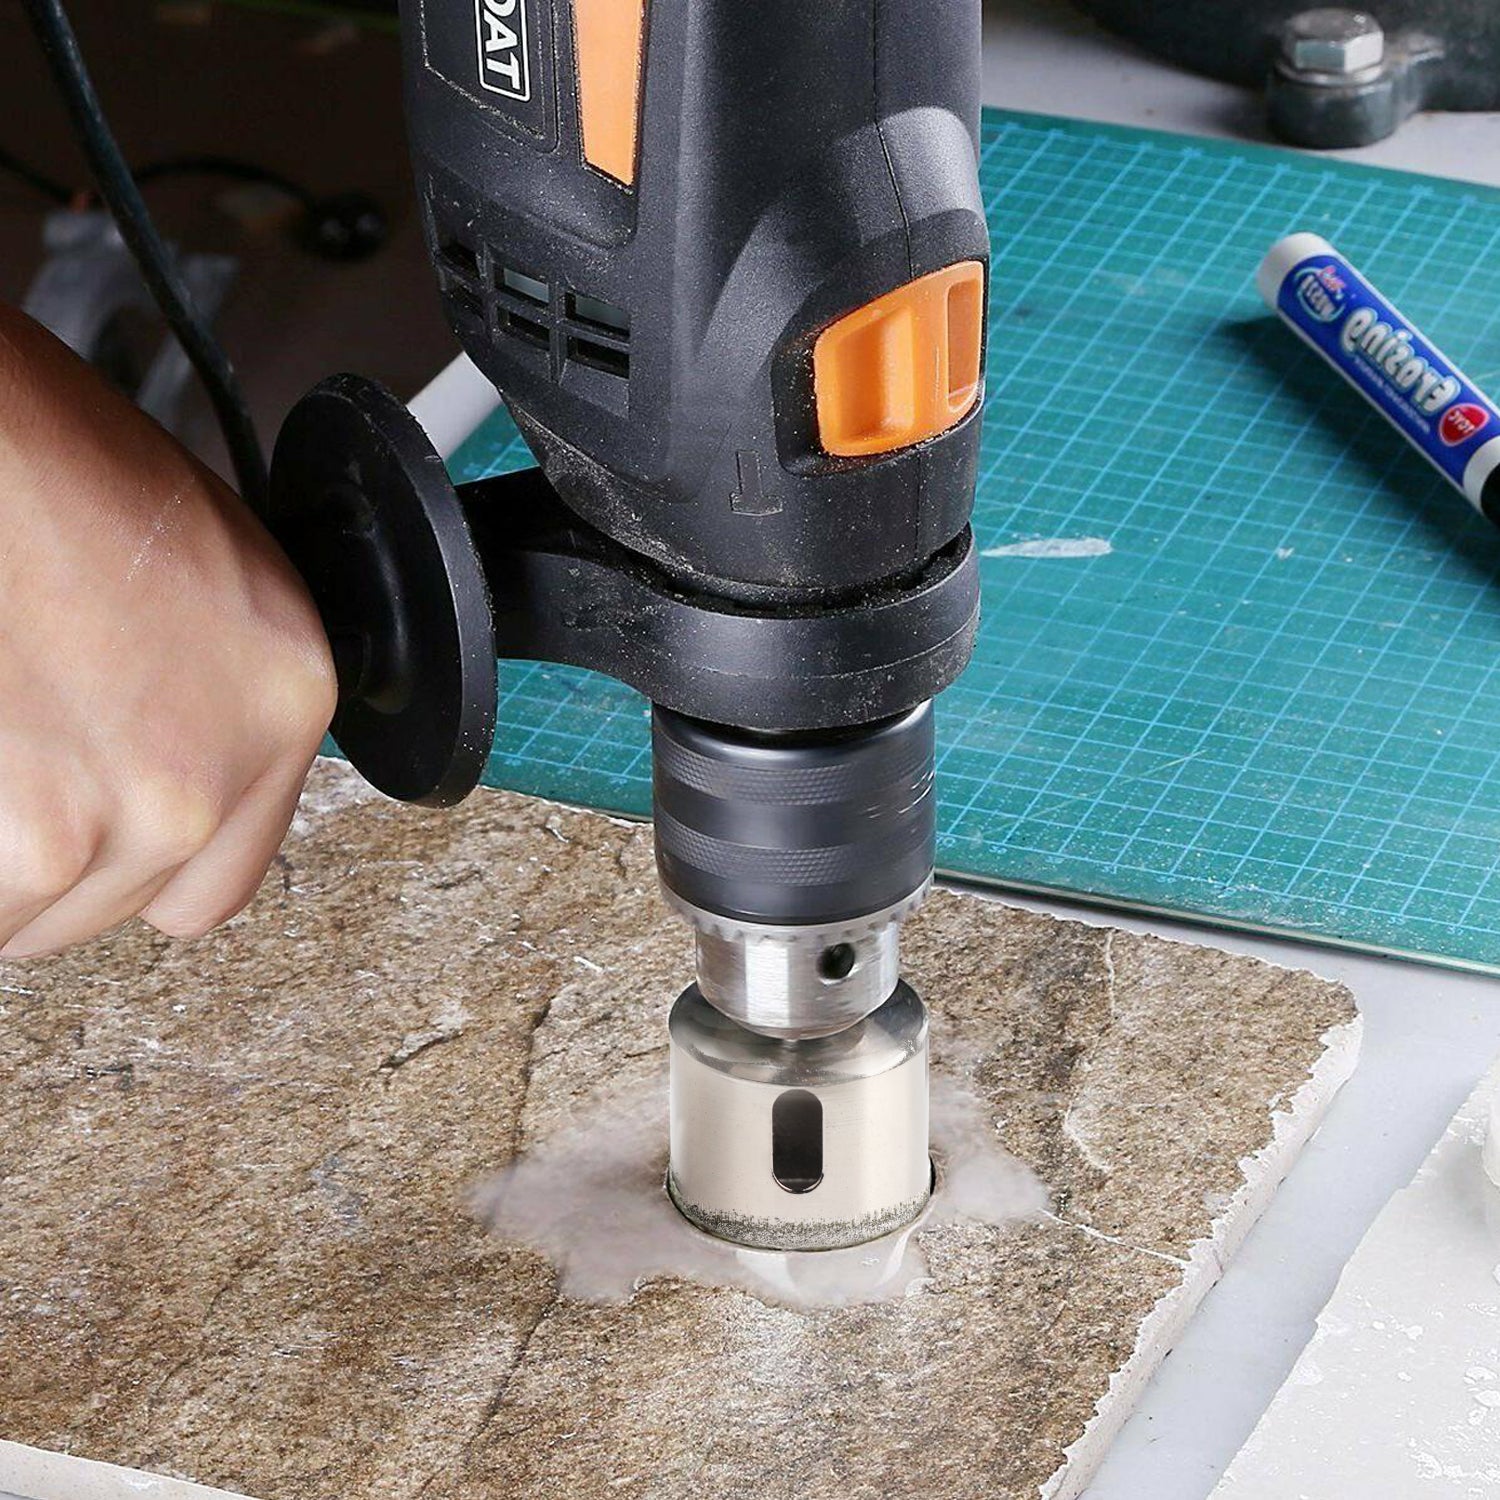 80mm Diamond Hole Saw Kit Tile Drill Bits for Ceramic, Glass, Tile, Porcelain, Marble, Granite